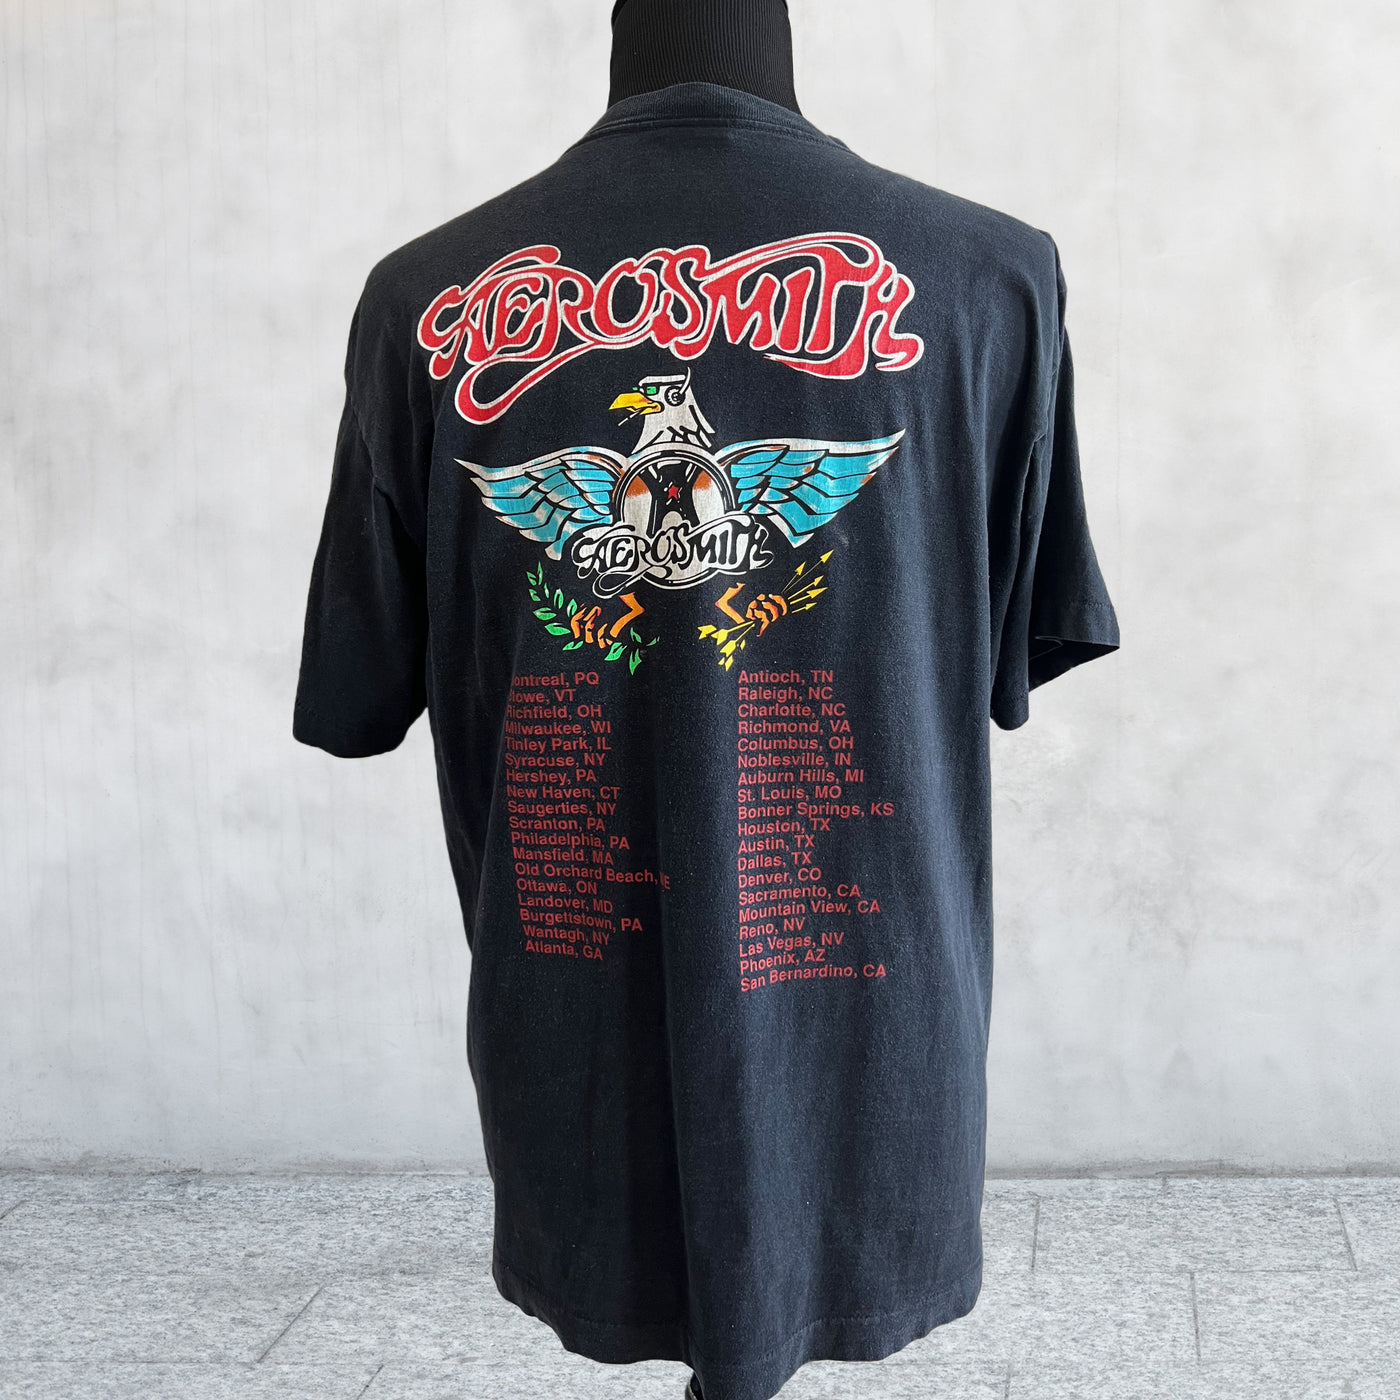 Vintage 1993 Aerosmith Tour T-shirt. XL back view